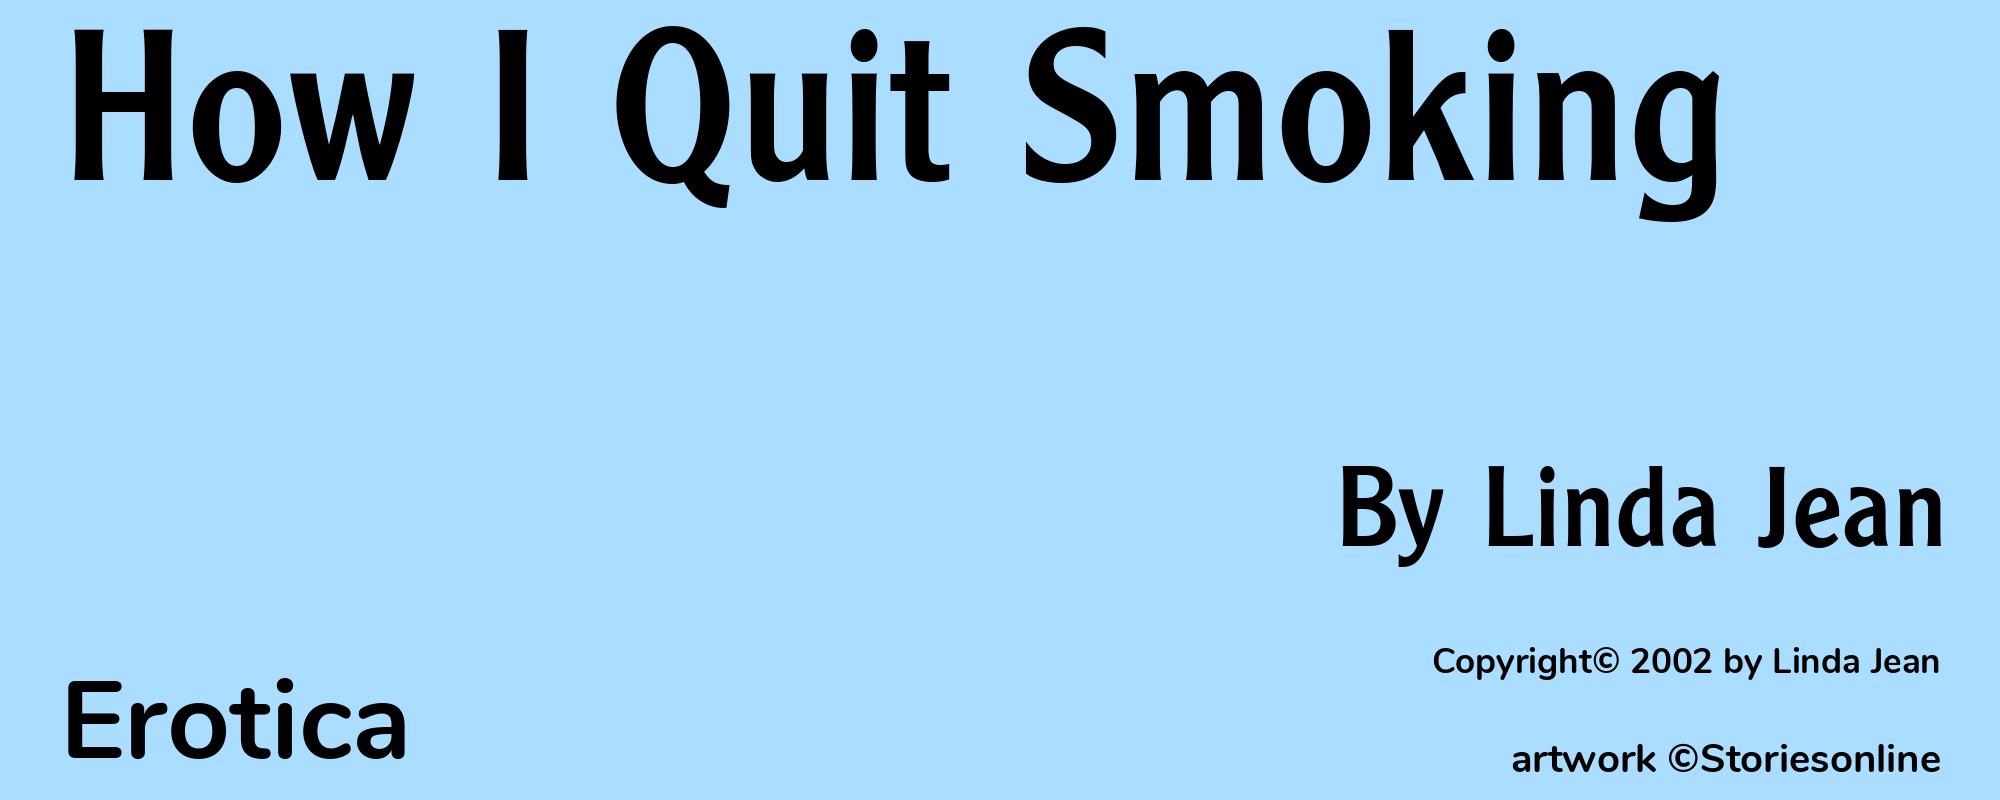 How I Quit Smoking - Cover